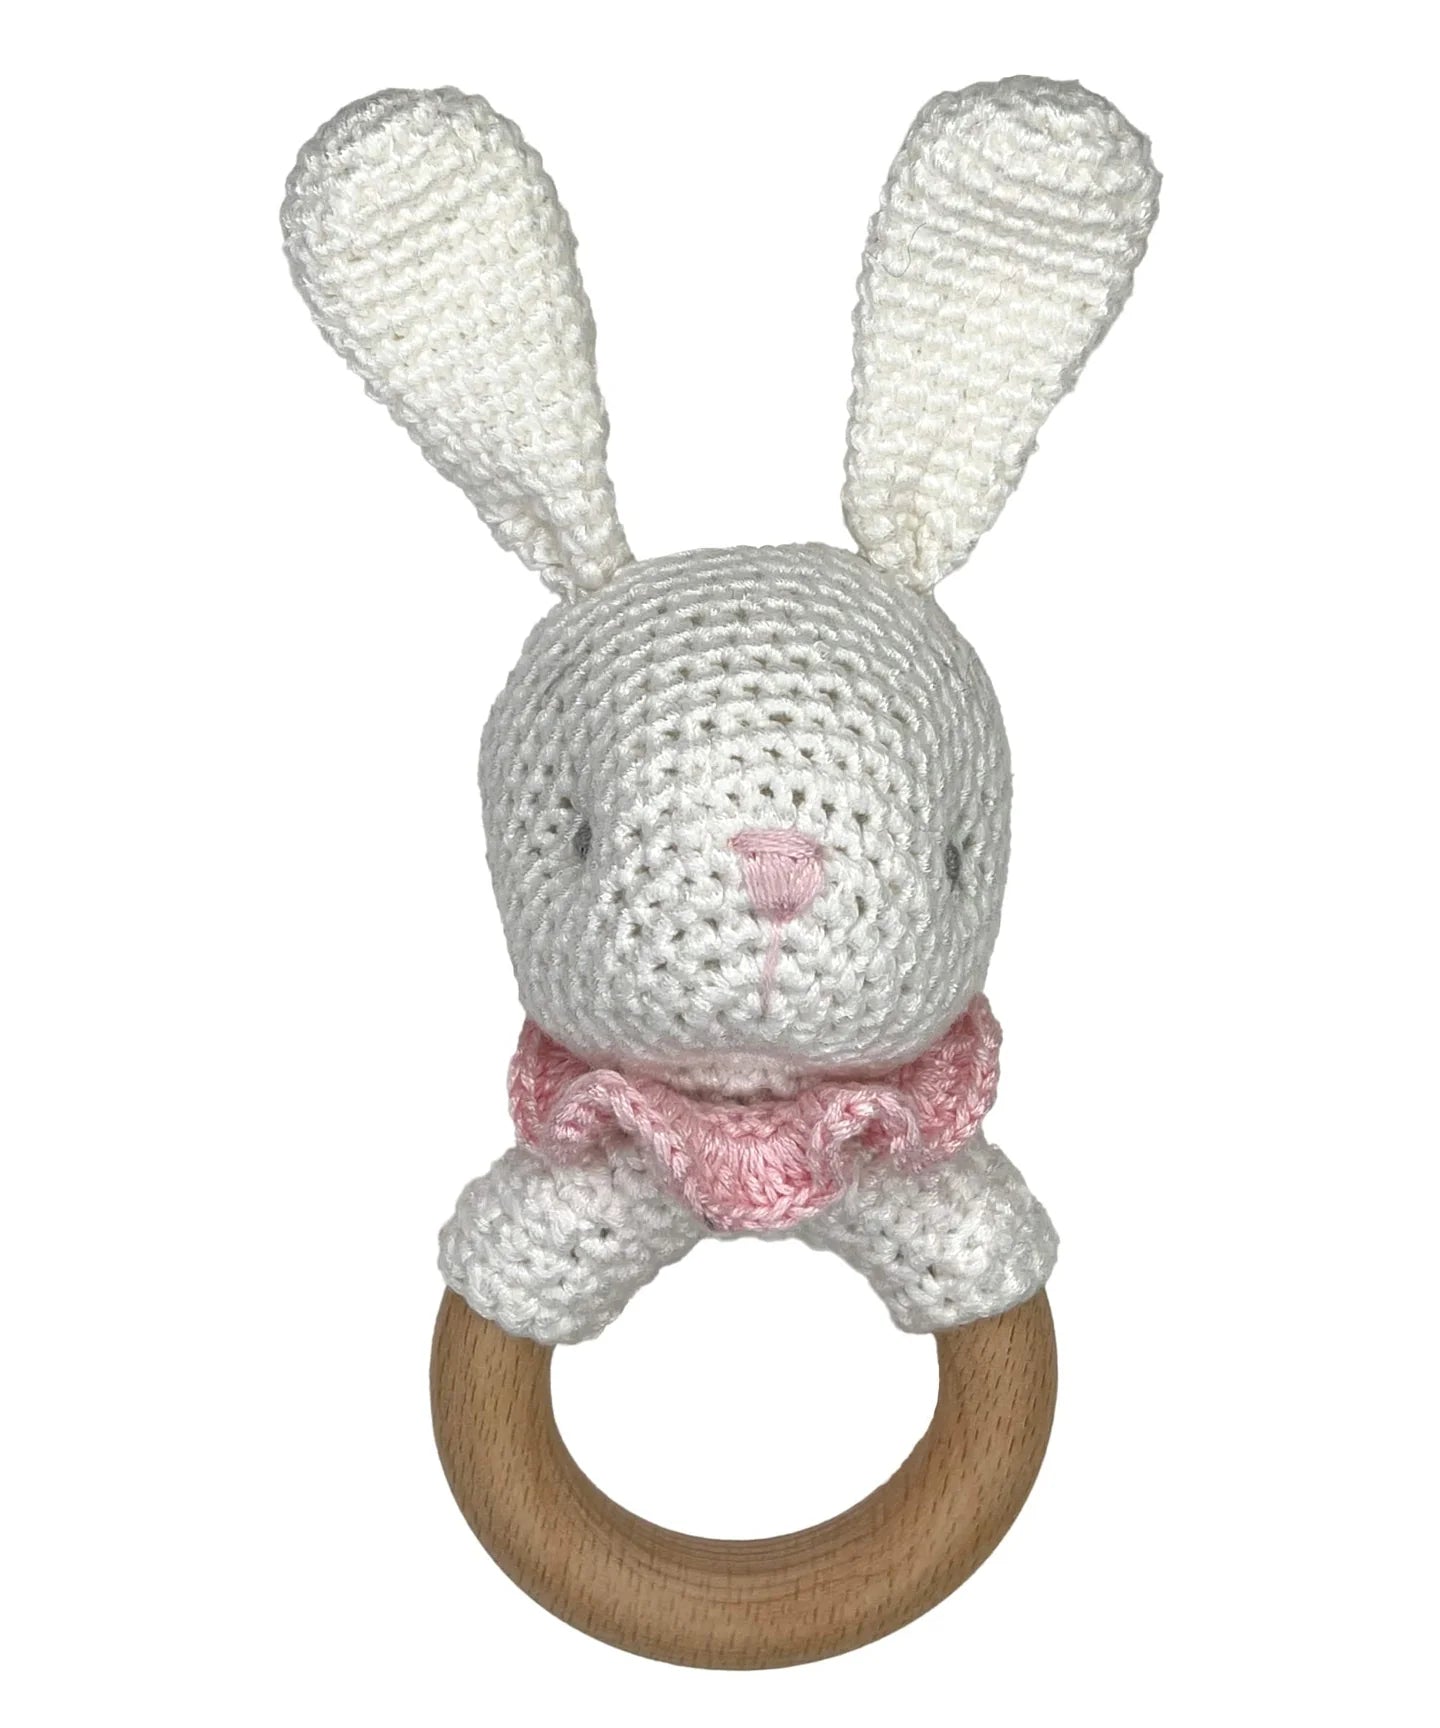 Crochet Bunny rattle